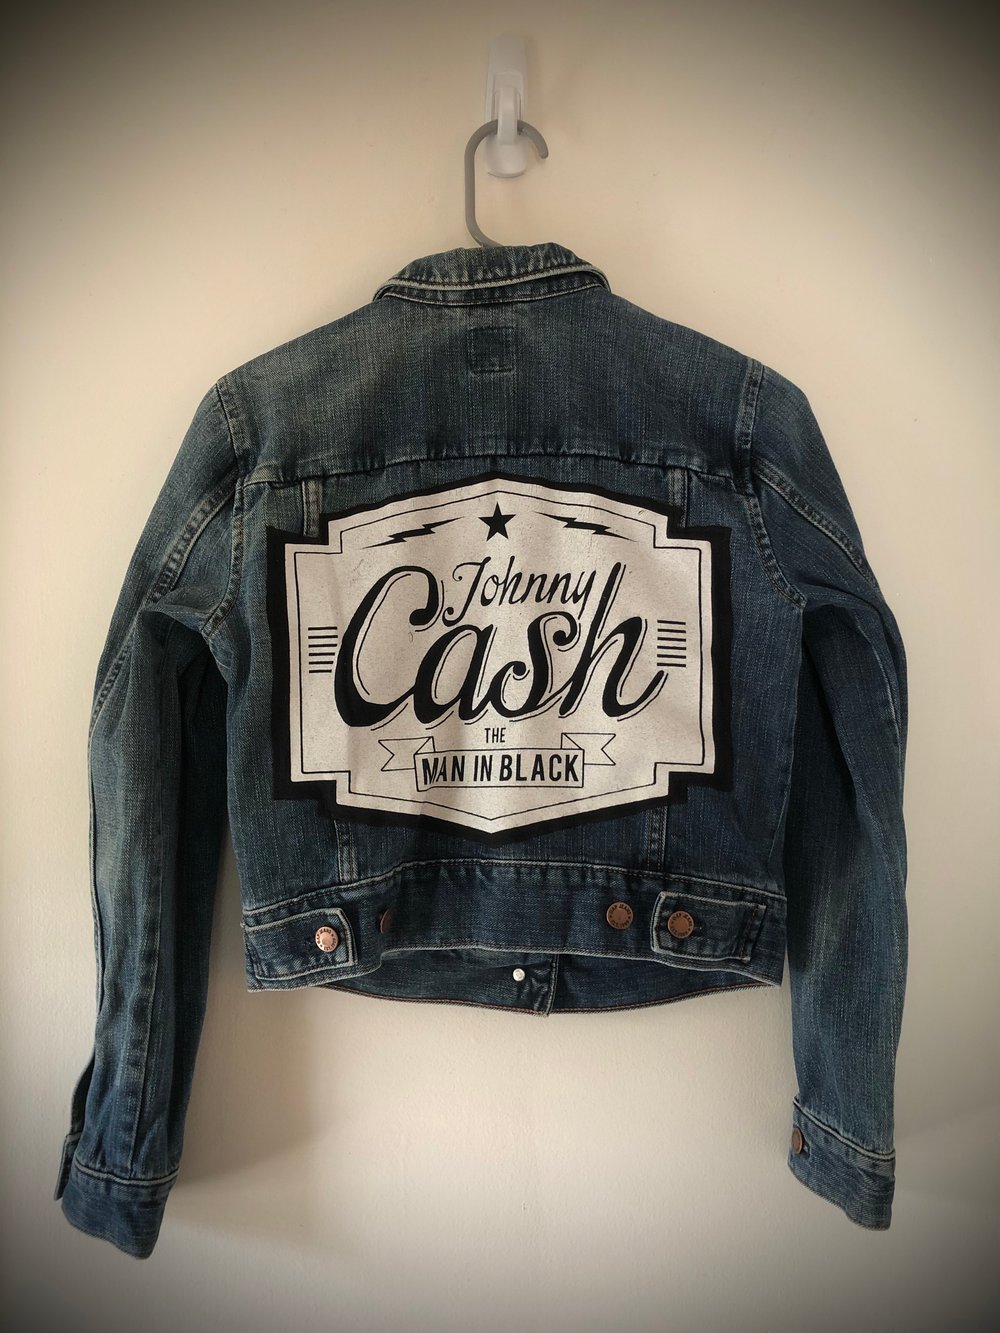 Upcycled “Johnny Cash” denim jacket